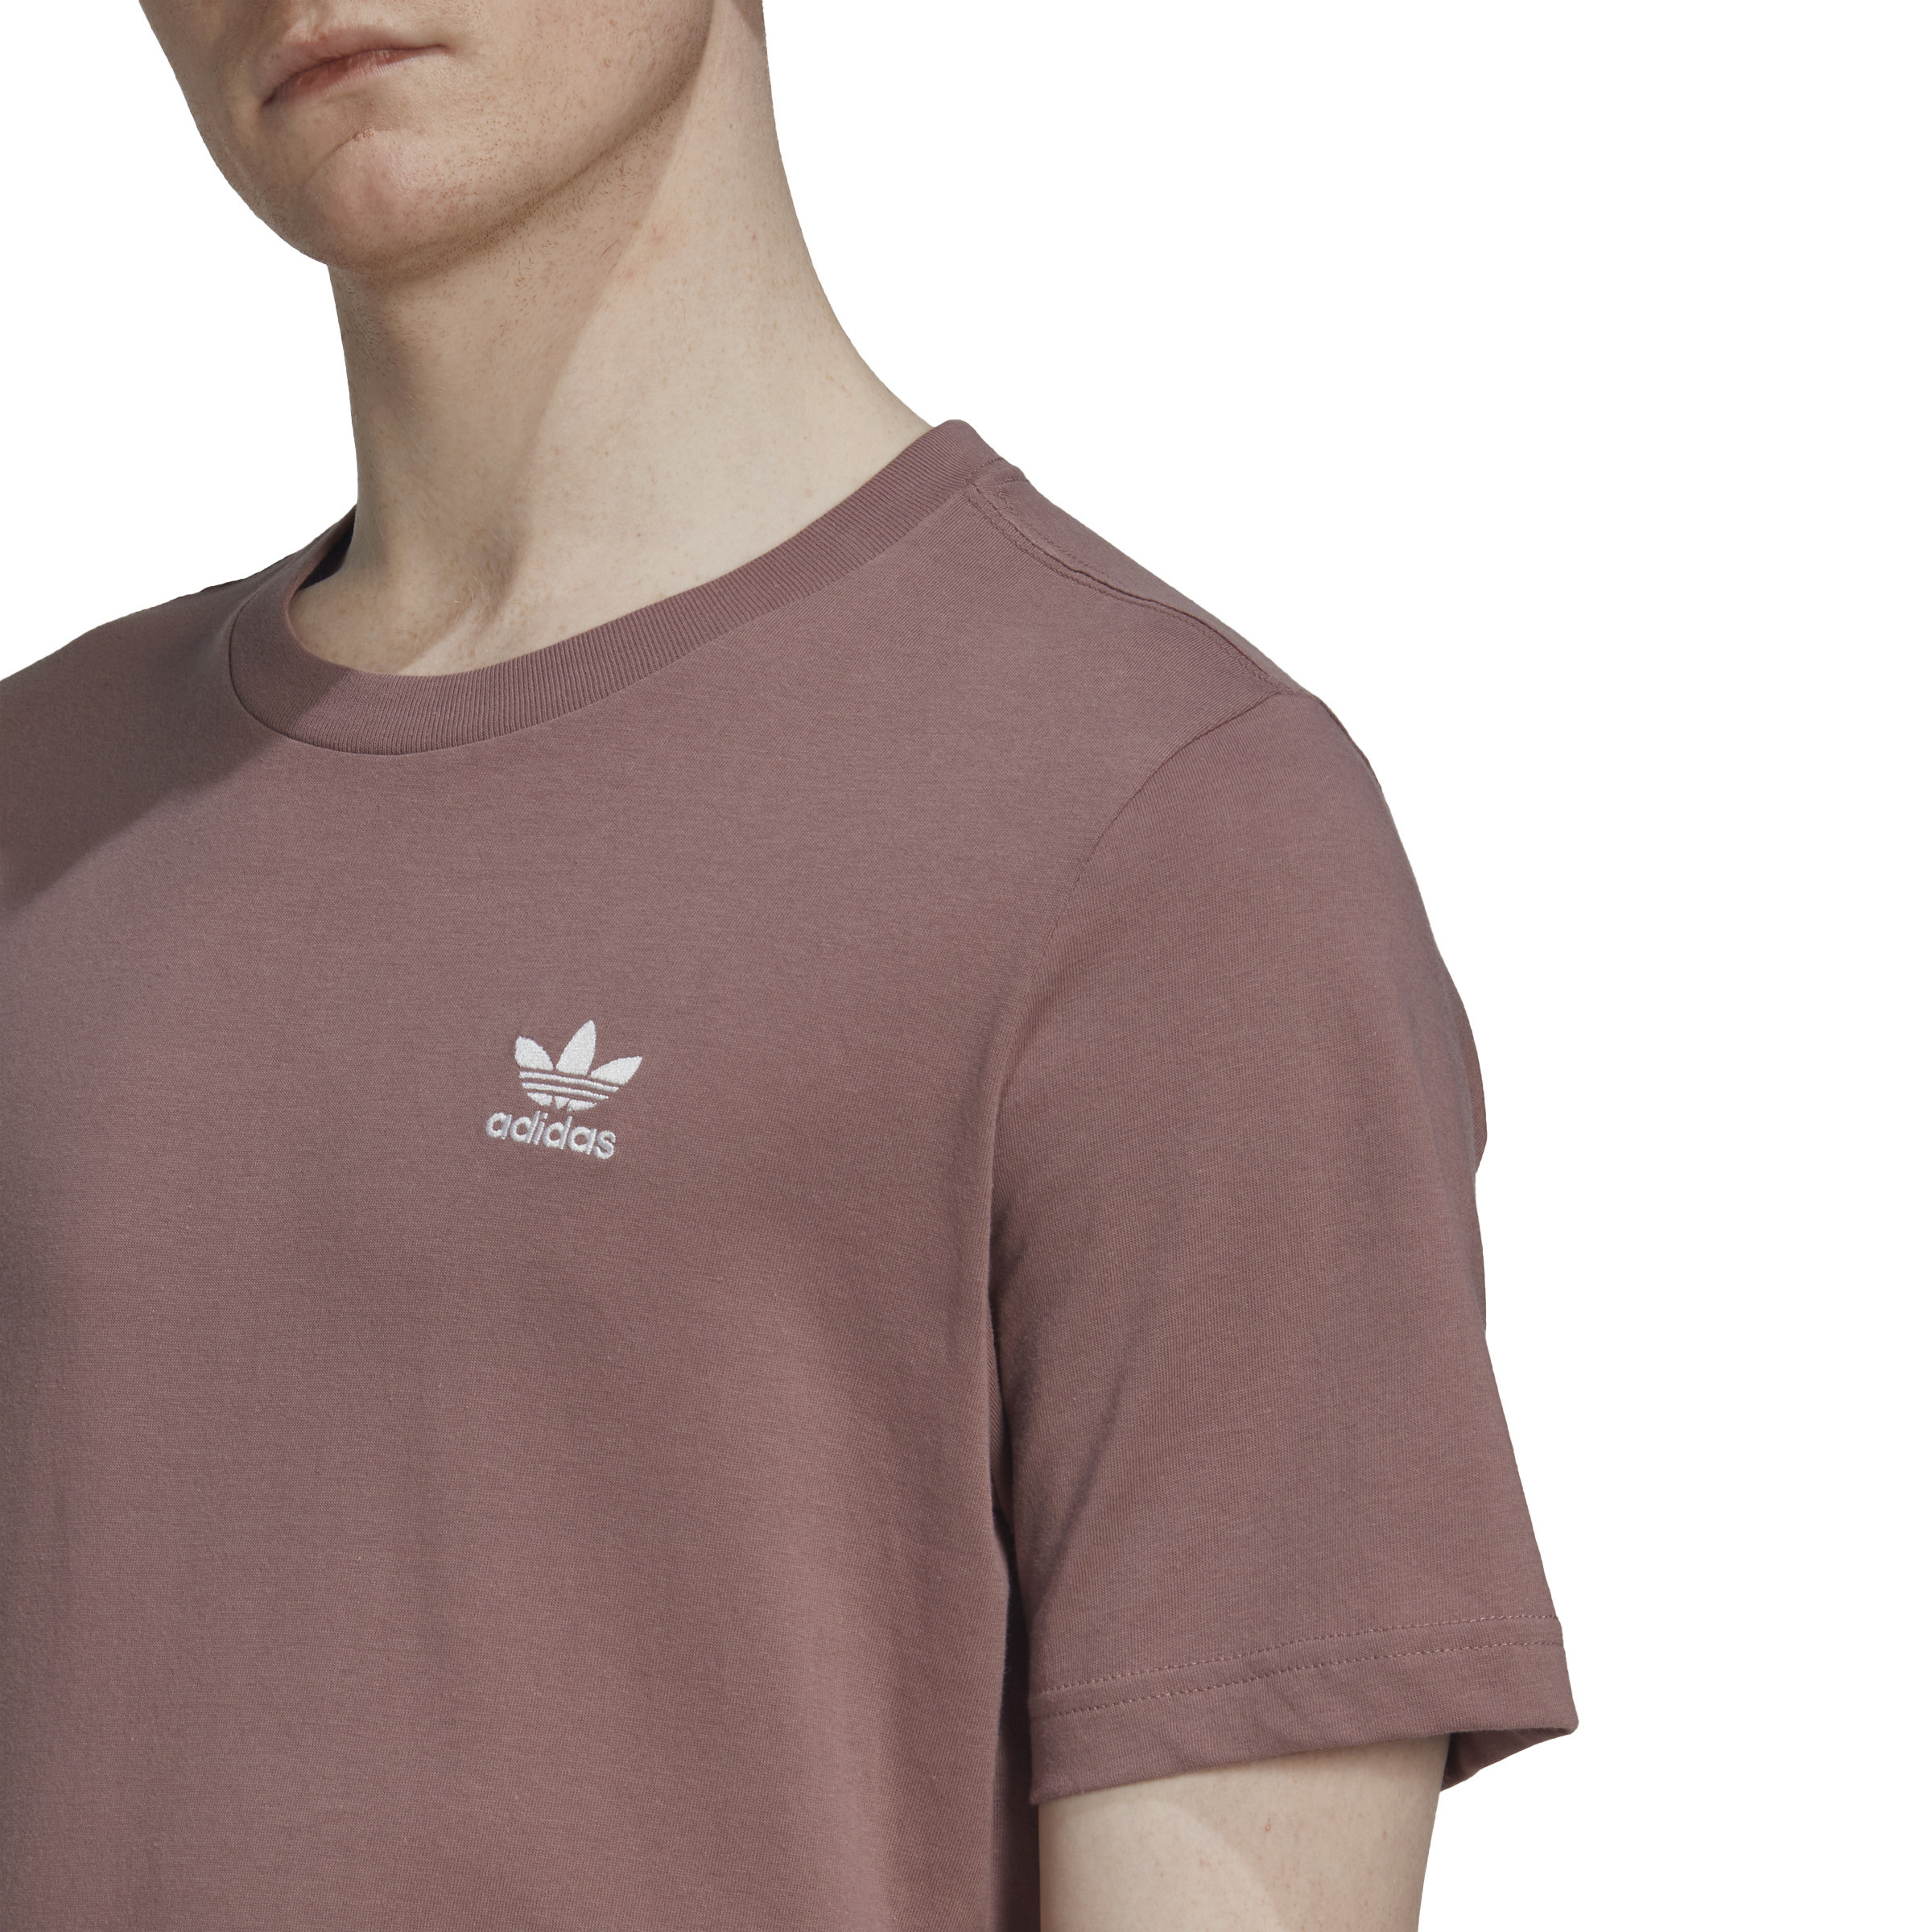 Adidas - T-shirt girocollo con logo, Rosa antico, large image number 2